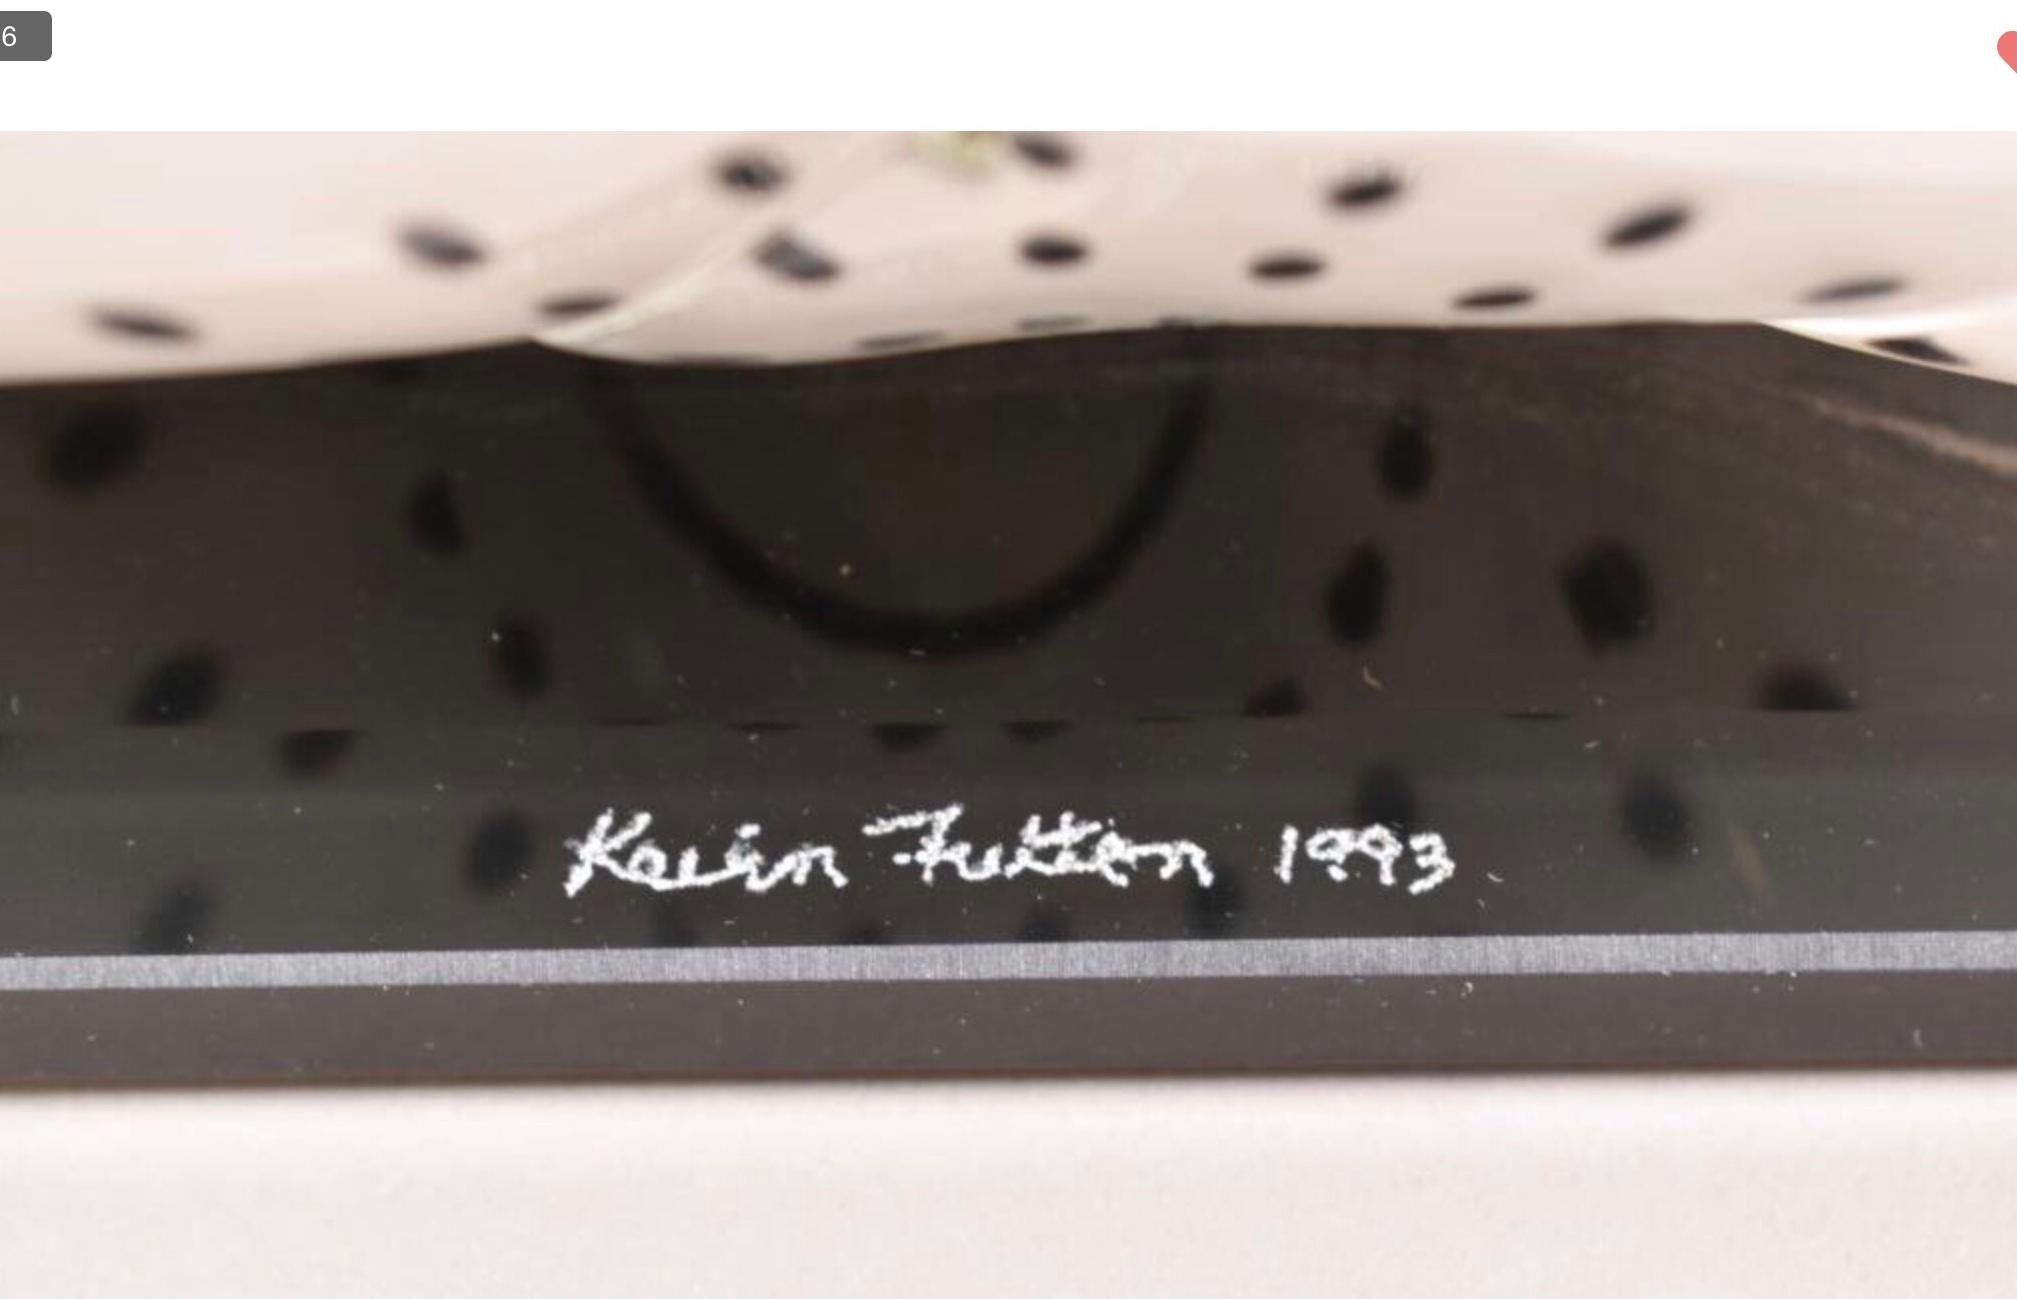 Kevin Fulton 1993 Art Glass Figural Bust For Sale 13